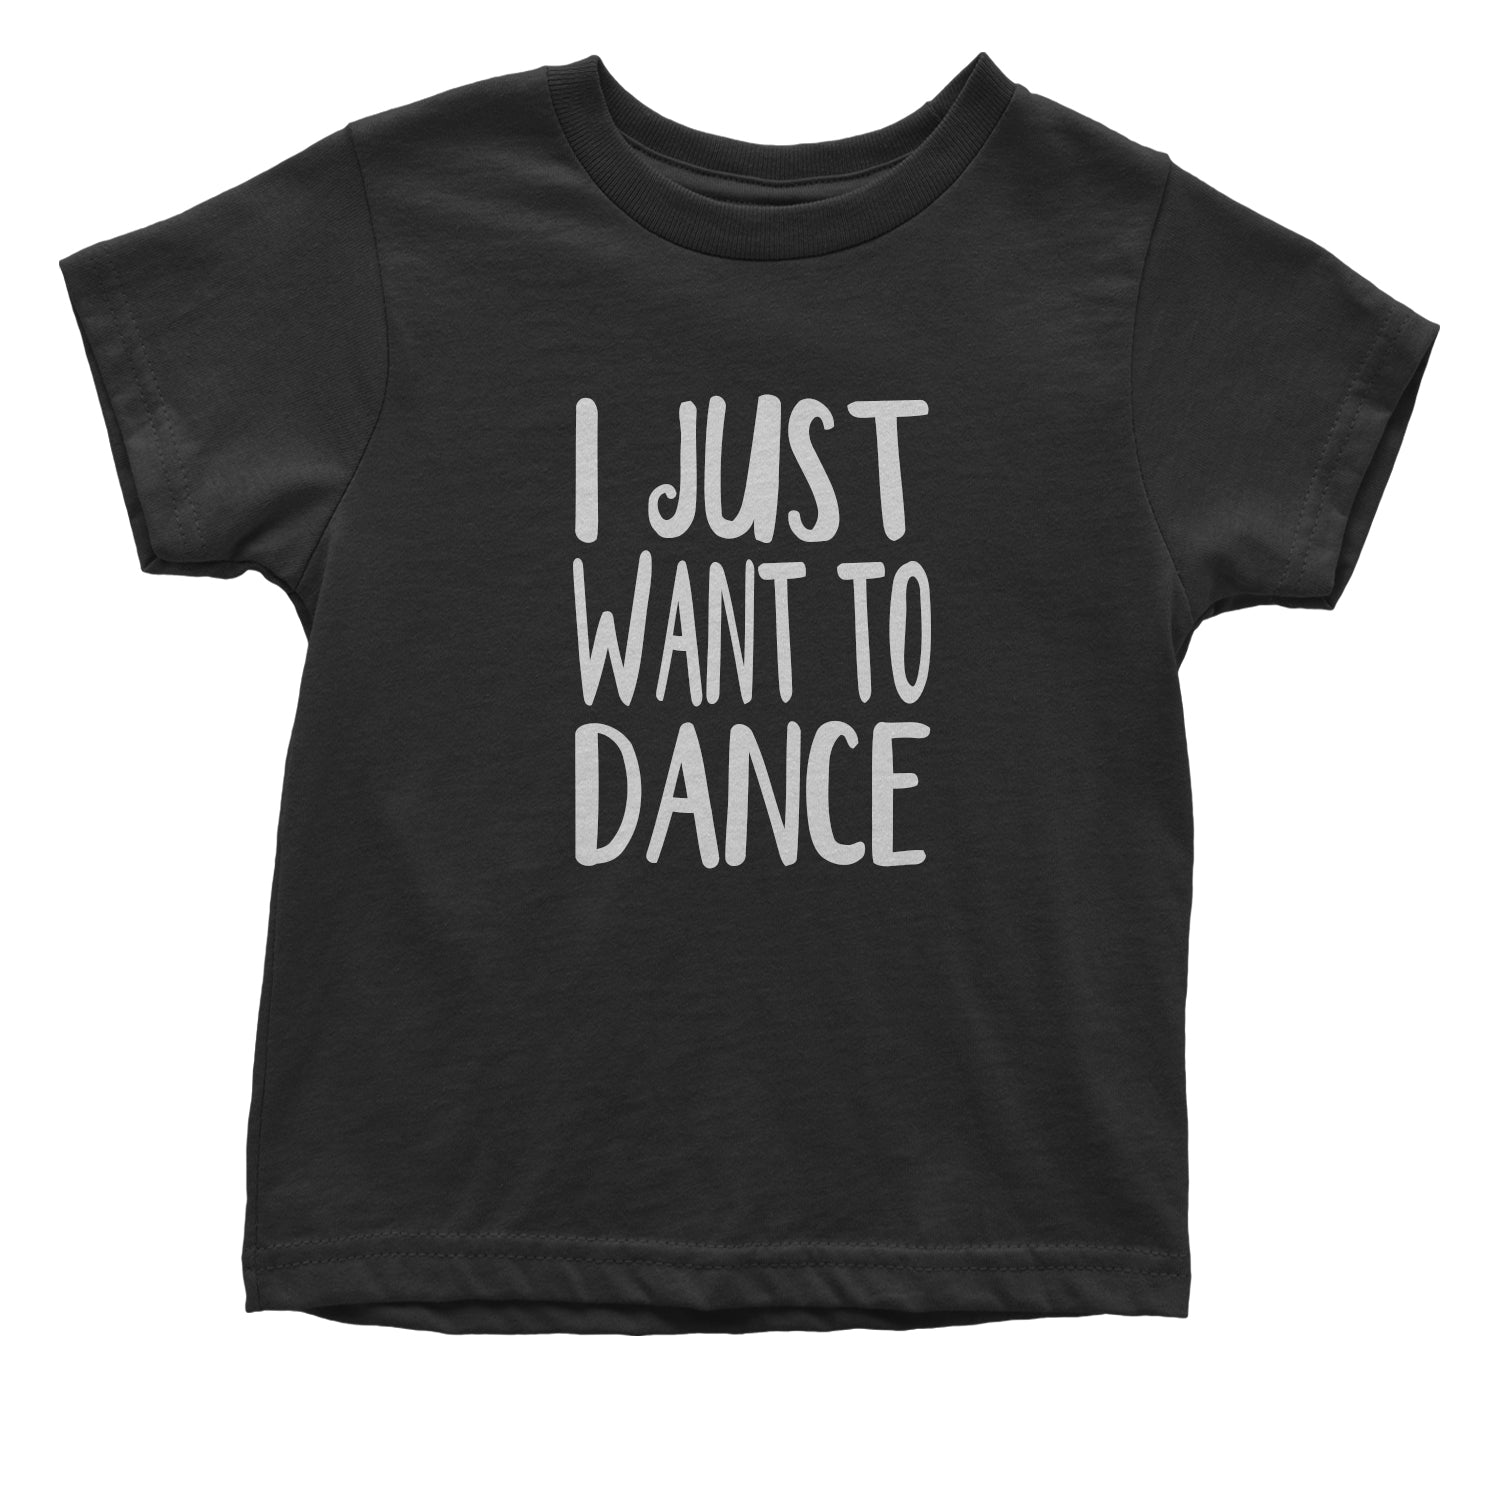 I Just Want To Dance Toddler T-Shirt boomerang, dancing, jo, jojo by Expression Tees